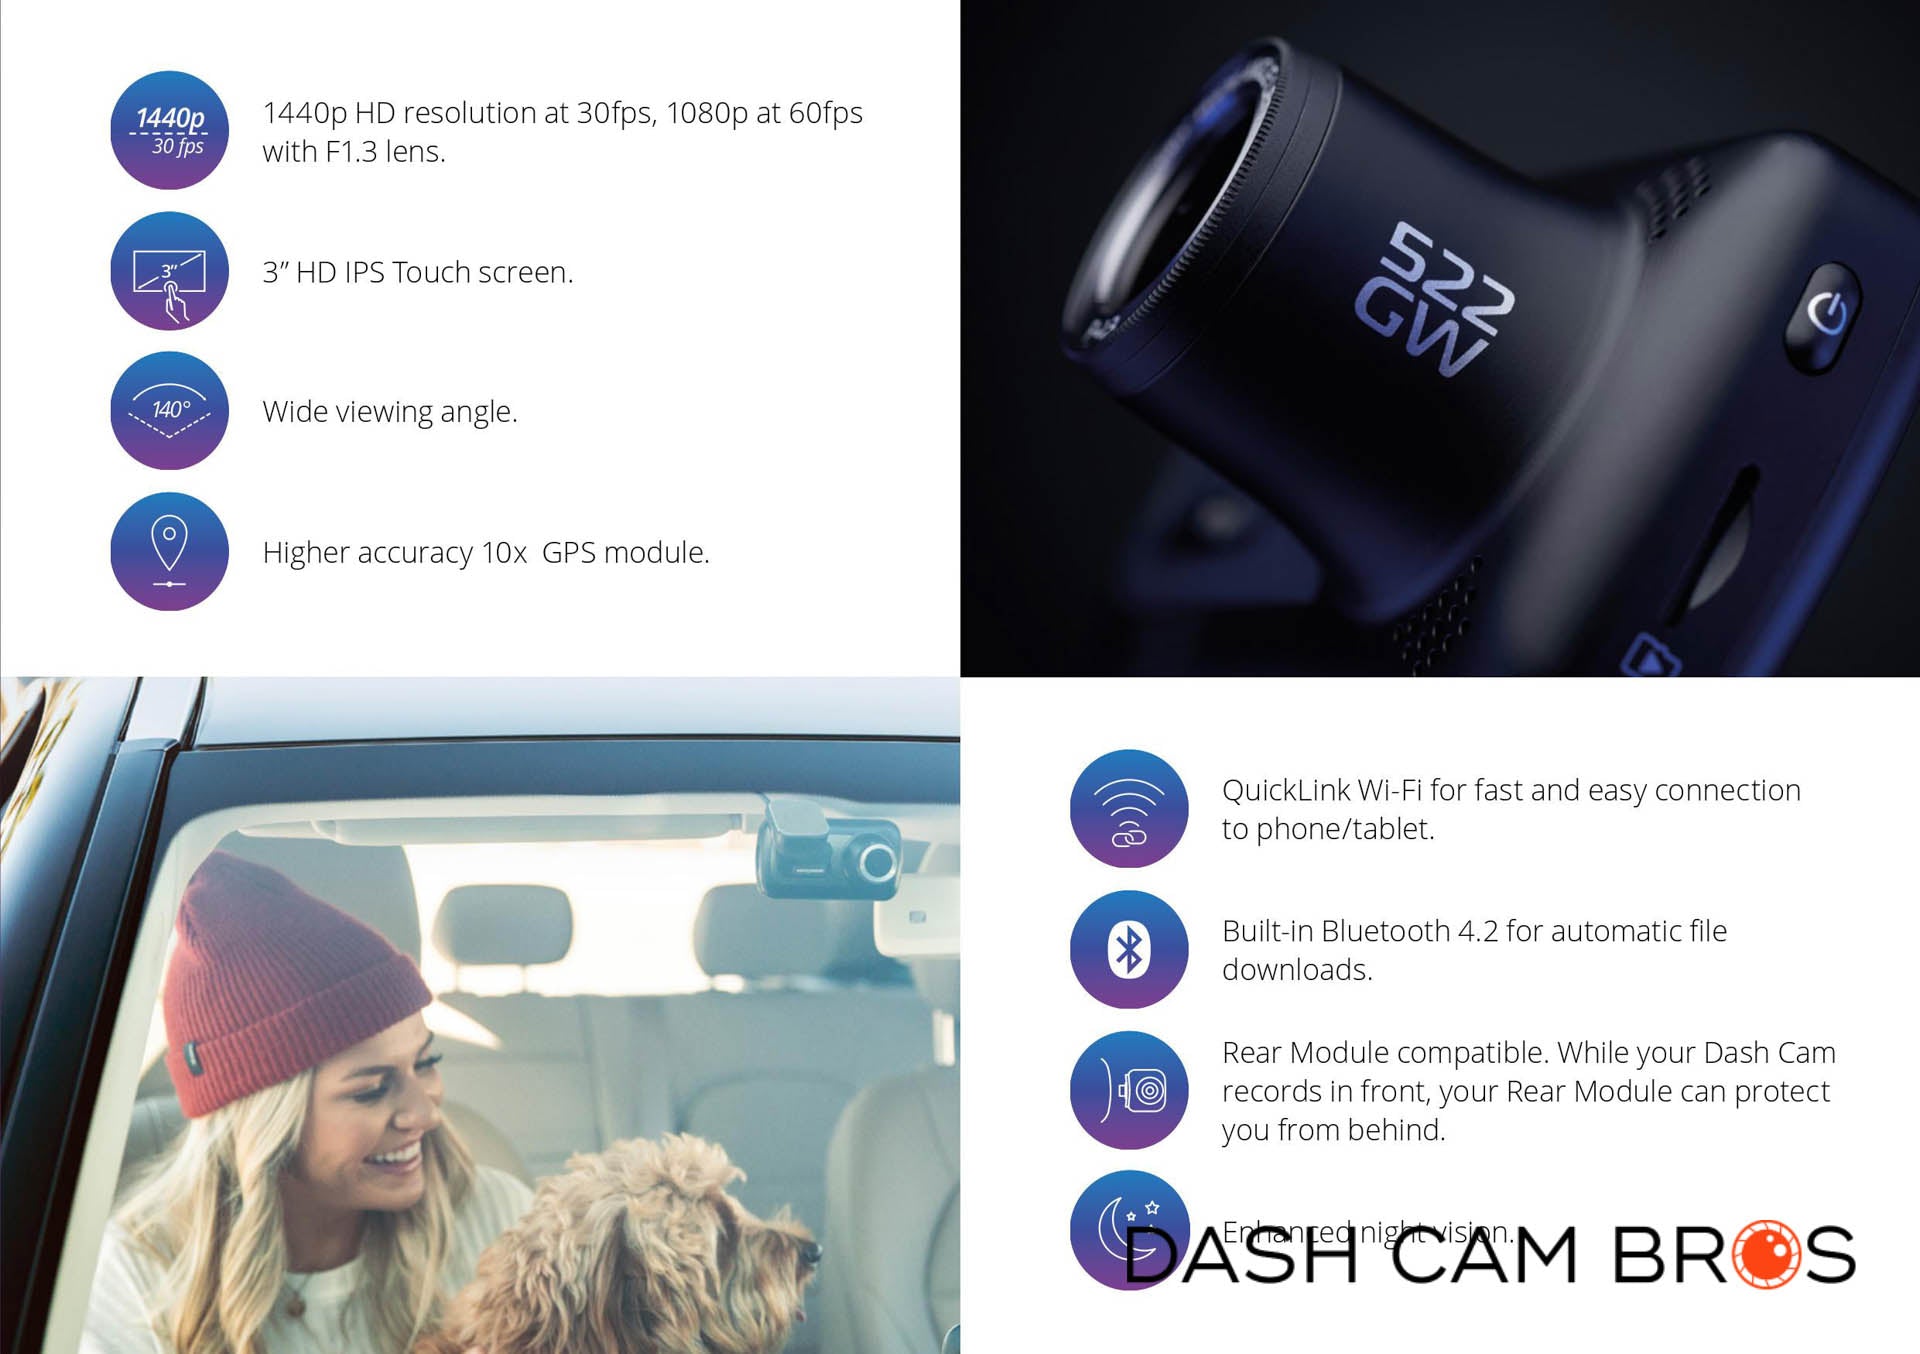 NEXTBASE 522GW Dash Cam 1440P/30fps Quad HD with Wi-Fi Bluetooth 10Hz GPS-  Built-in Alexa- Night Vision- Parking Mode- 280/360 Degree Dual 6 Lane Wide